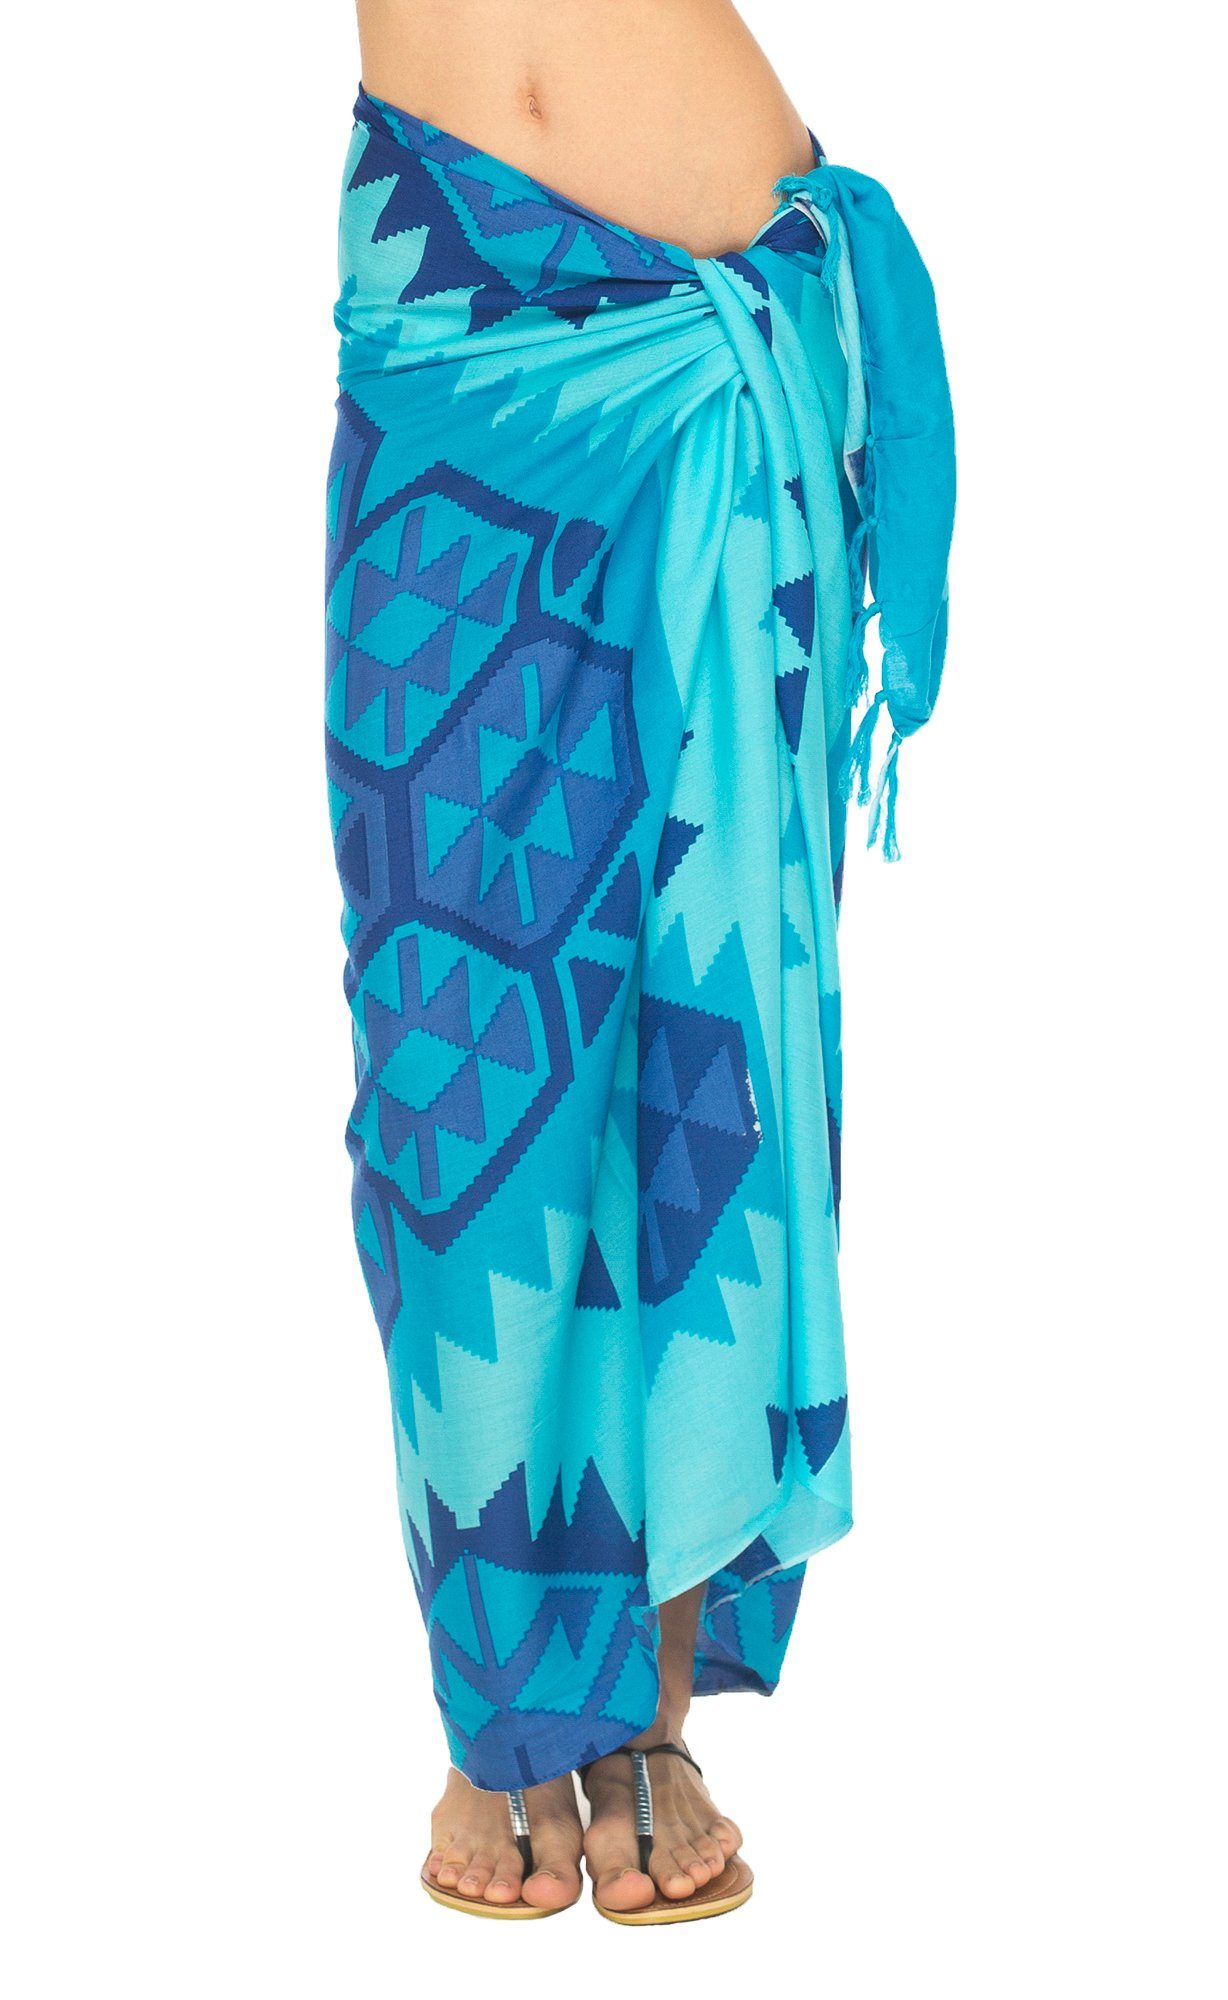 Ethnic Design Sarong with Fringe - Love-Shu-Shi - Turquoise and Blue Sarong